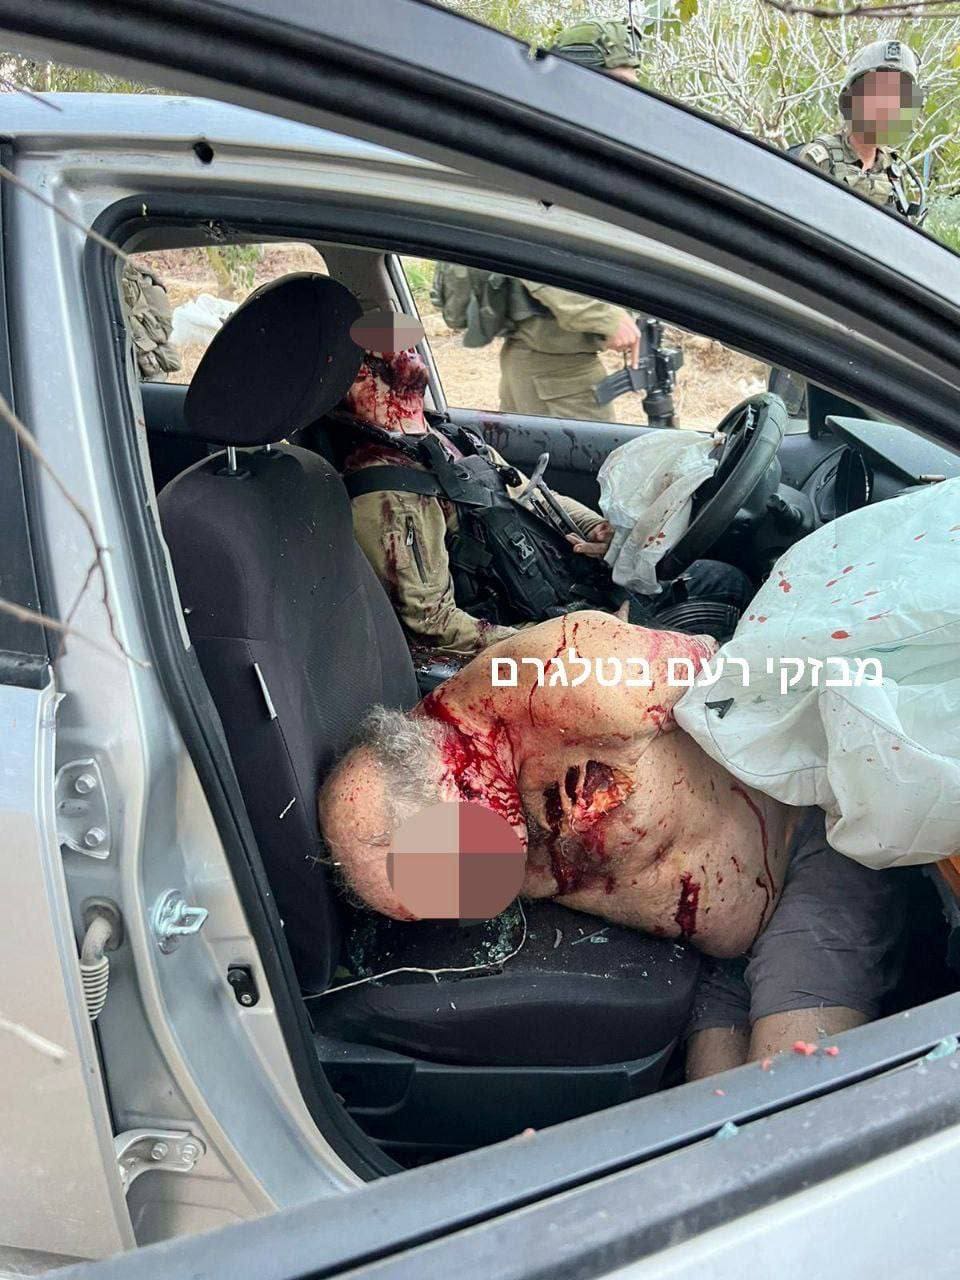 Hamas slaughtered Israeli man 